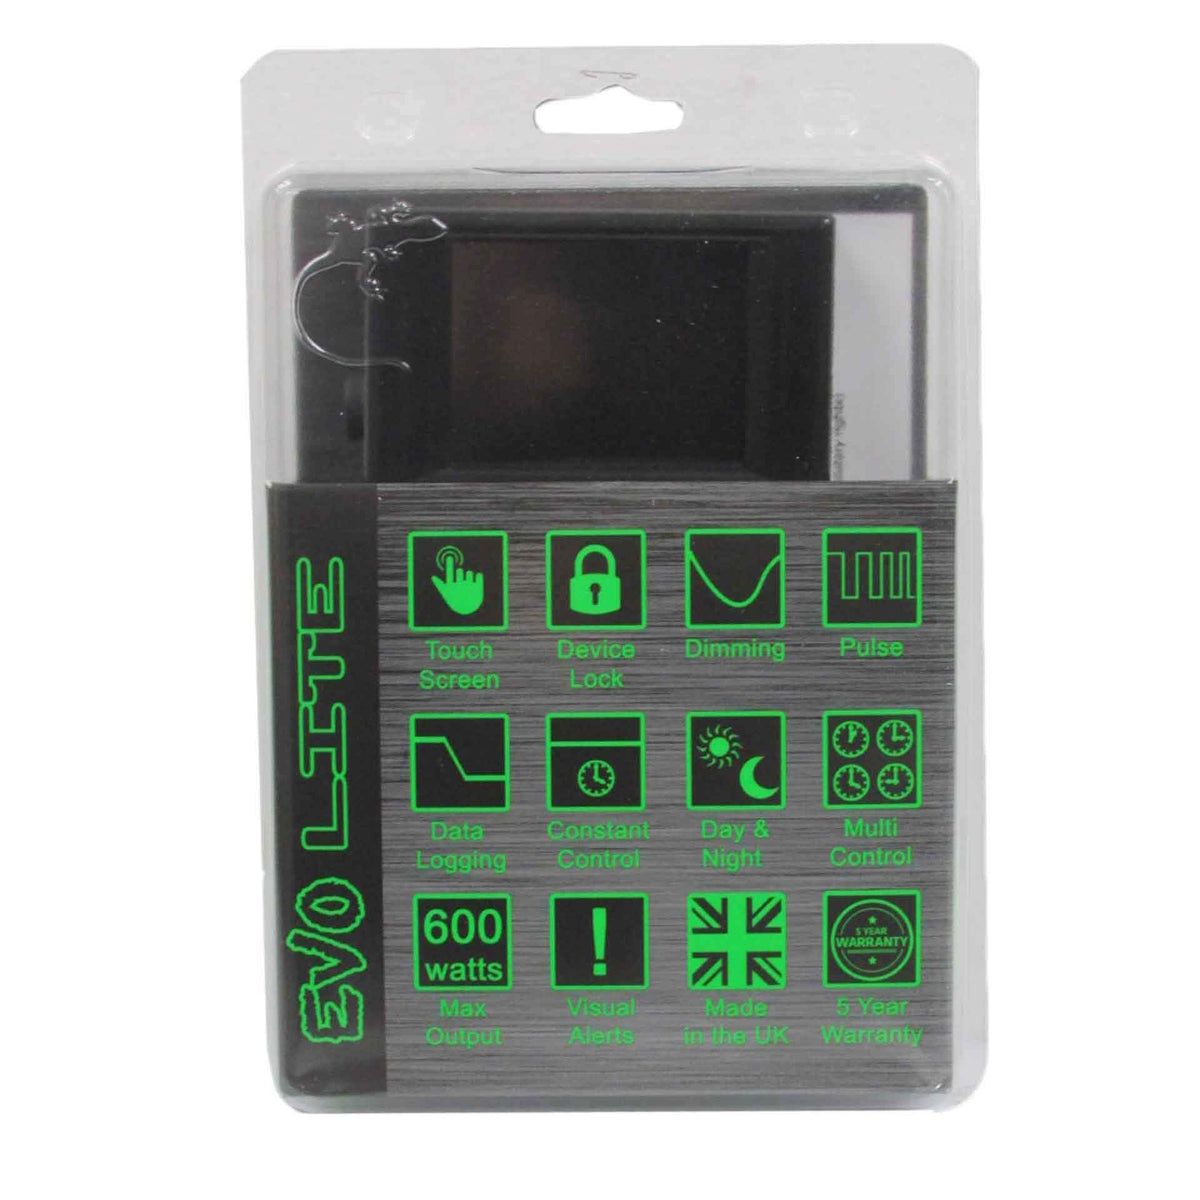 Microclimate Evo Lite Digital Thermostat (Black)